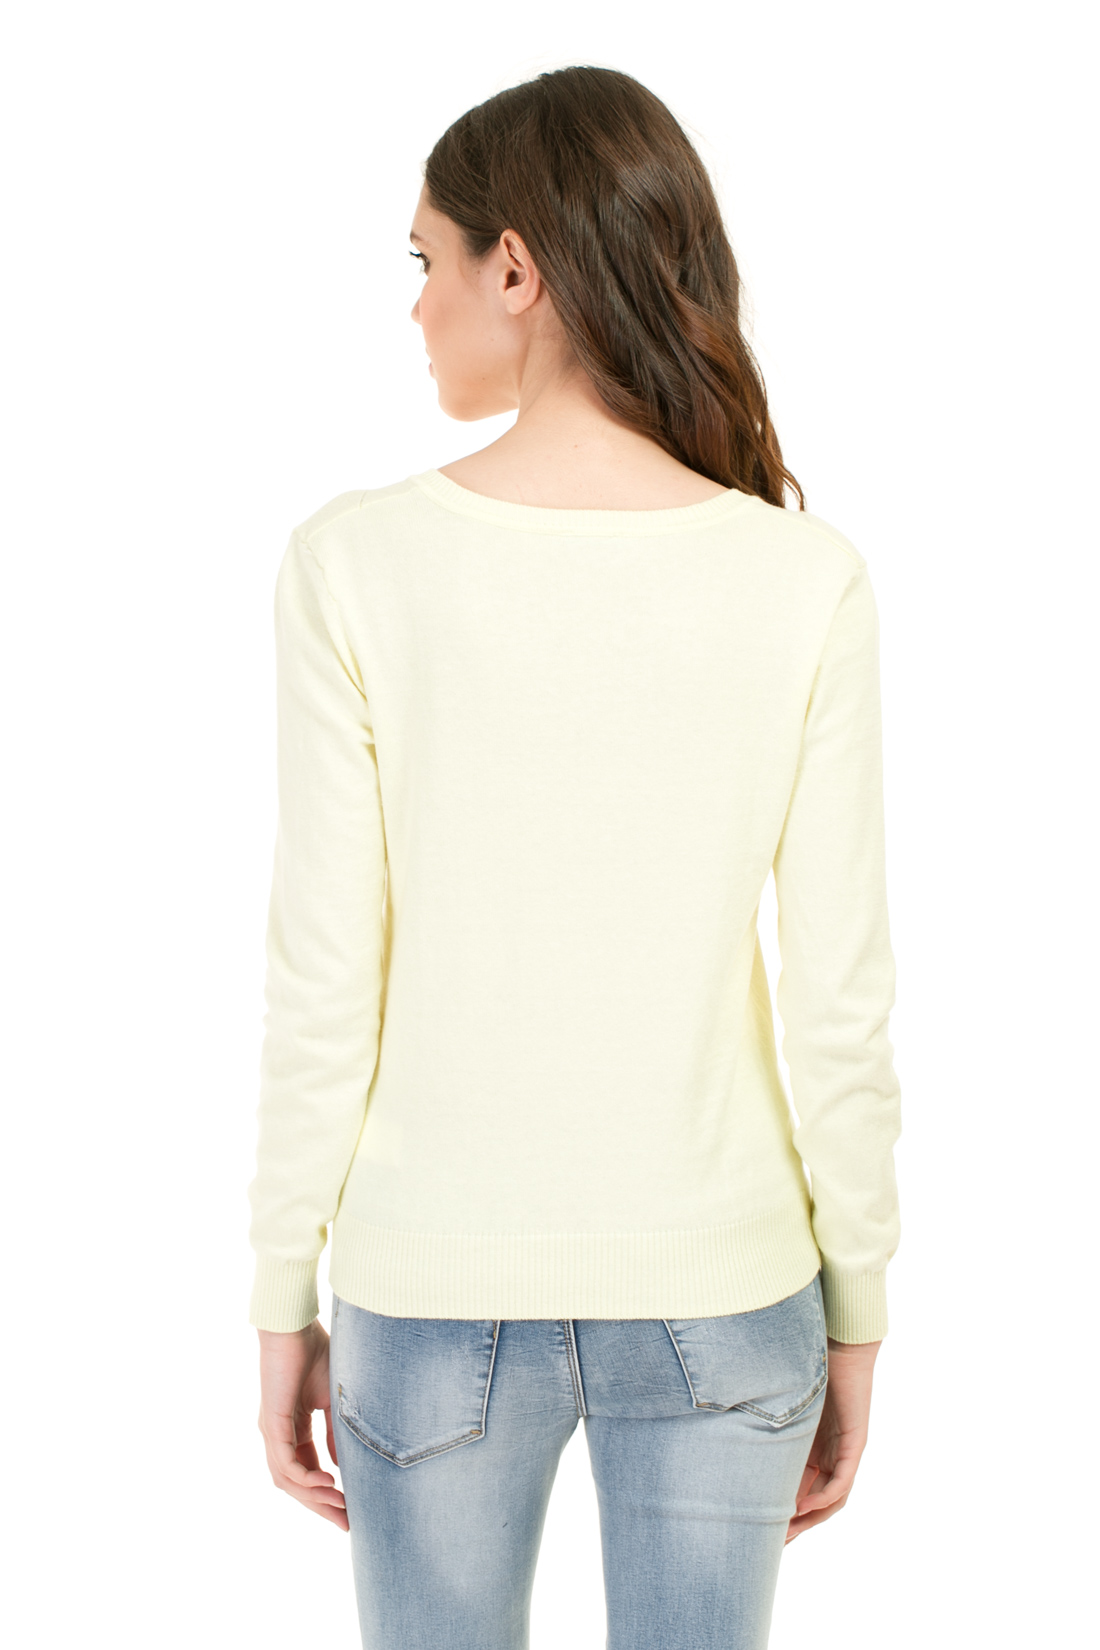 Базовый пуловер с ромбами (арт. baon B137204), размер L, цвет белый Базовый пуловер с ромбами (арт. baon B137204) - фото 2